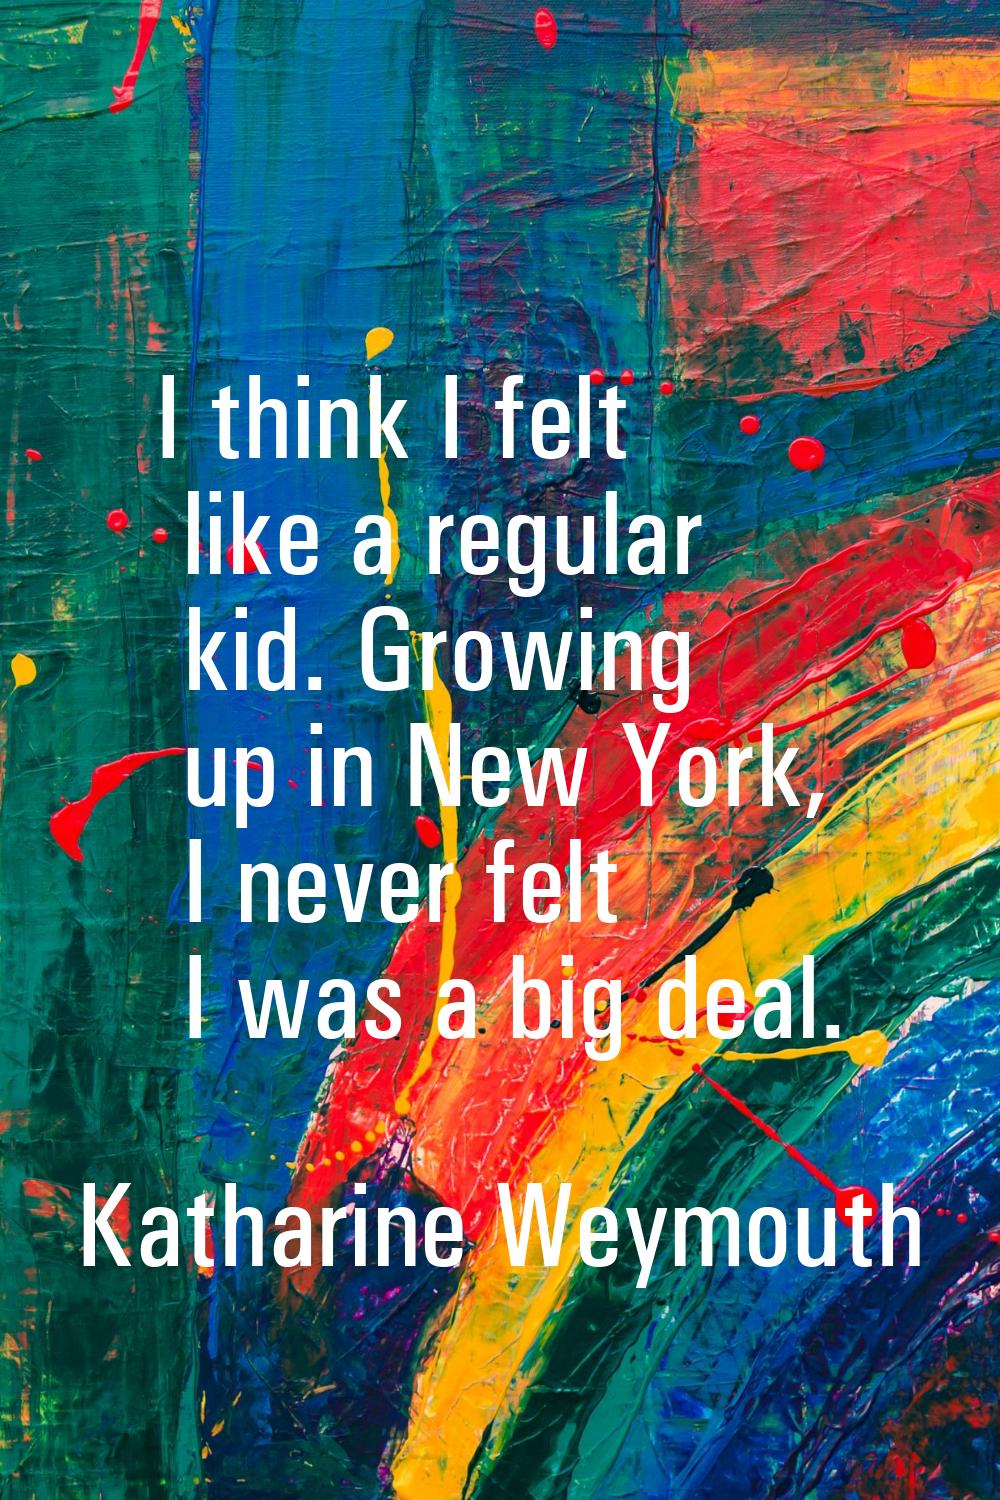 I think I felt like a regular kid. Growing up in New York, I never felt I was a big deal.